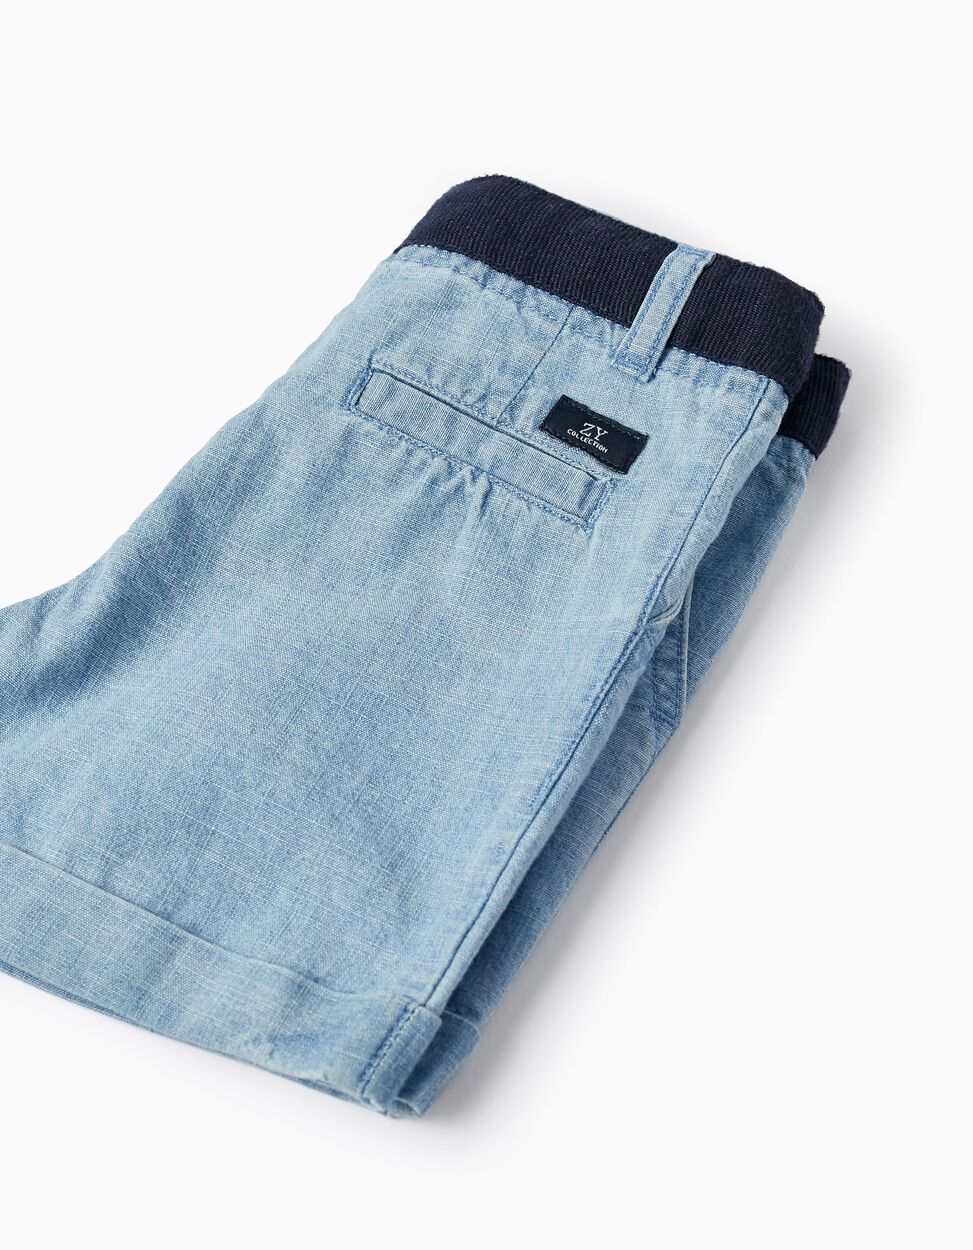 Buy Online Cotton Denim Shorts for Baby Boys, Blue